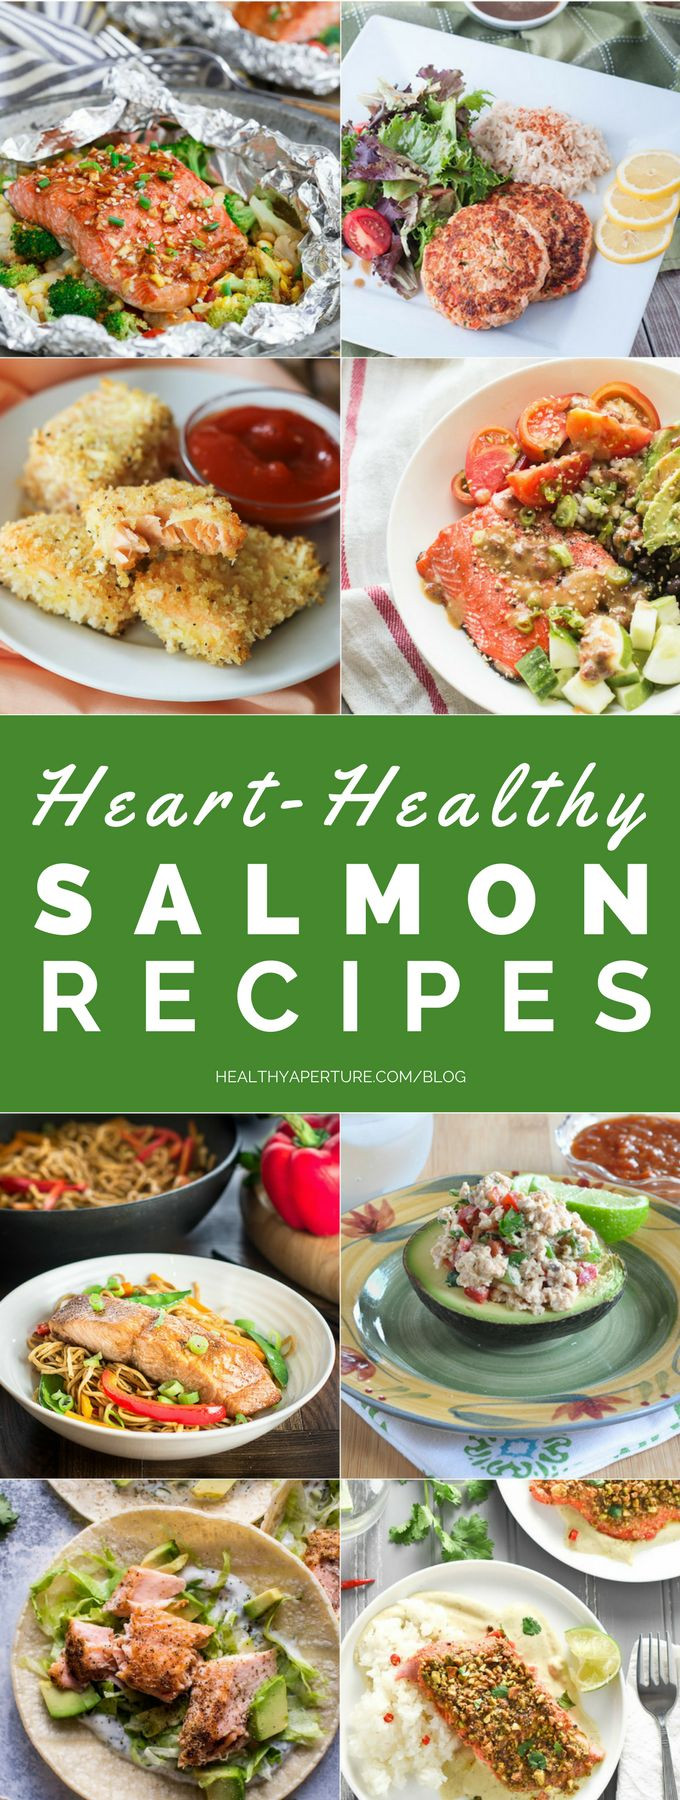 Heart Healthy Dinner Ideas
 Best 25 Heart healthy recipes ideas on Pinterest